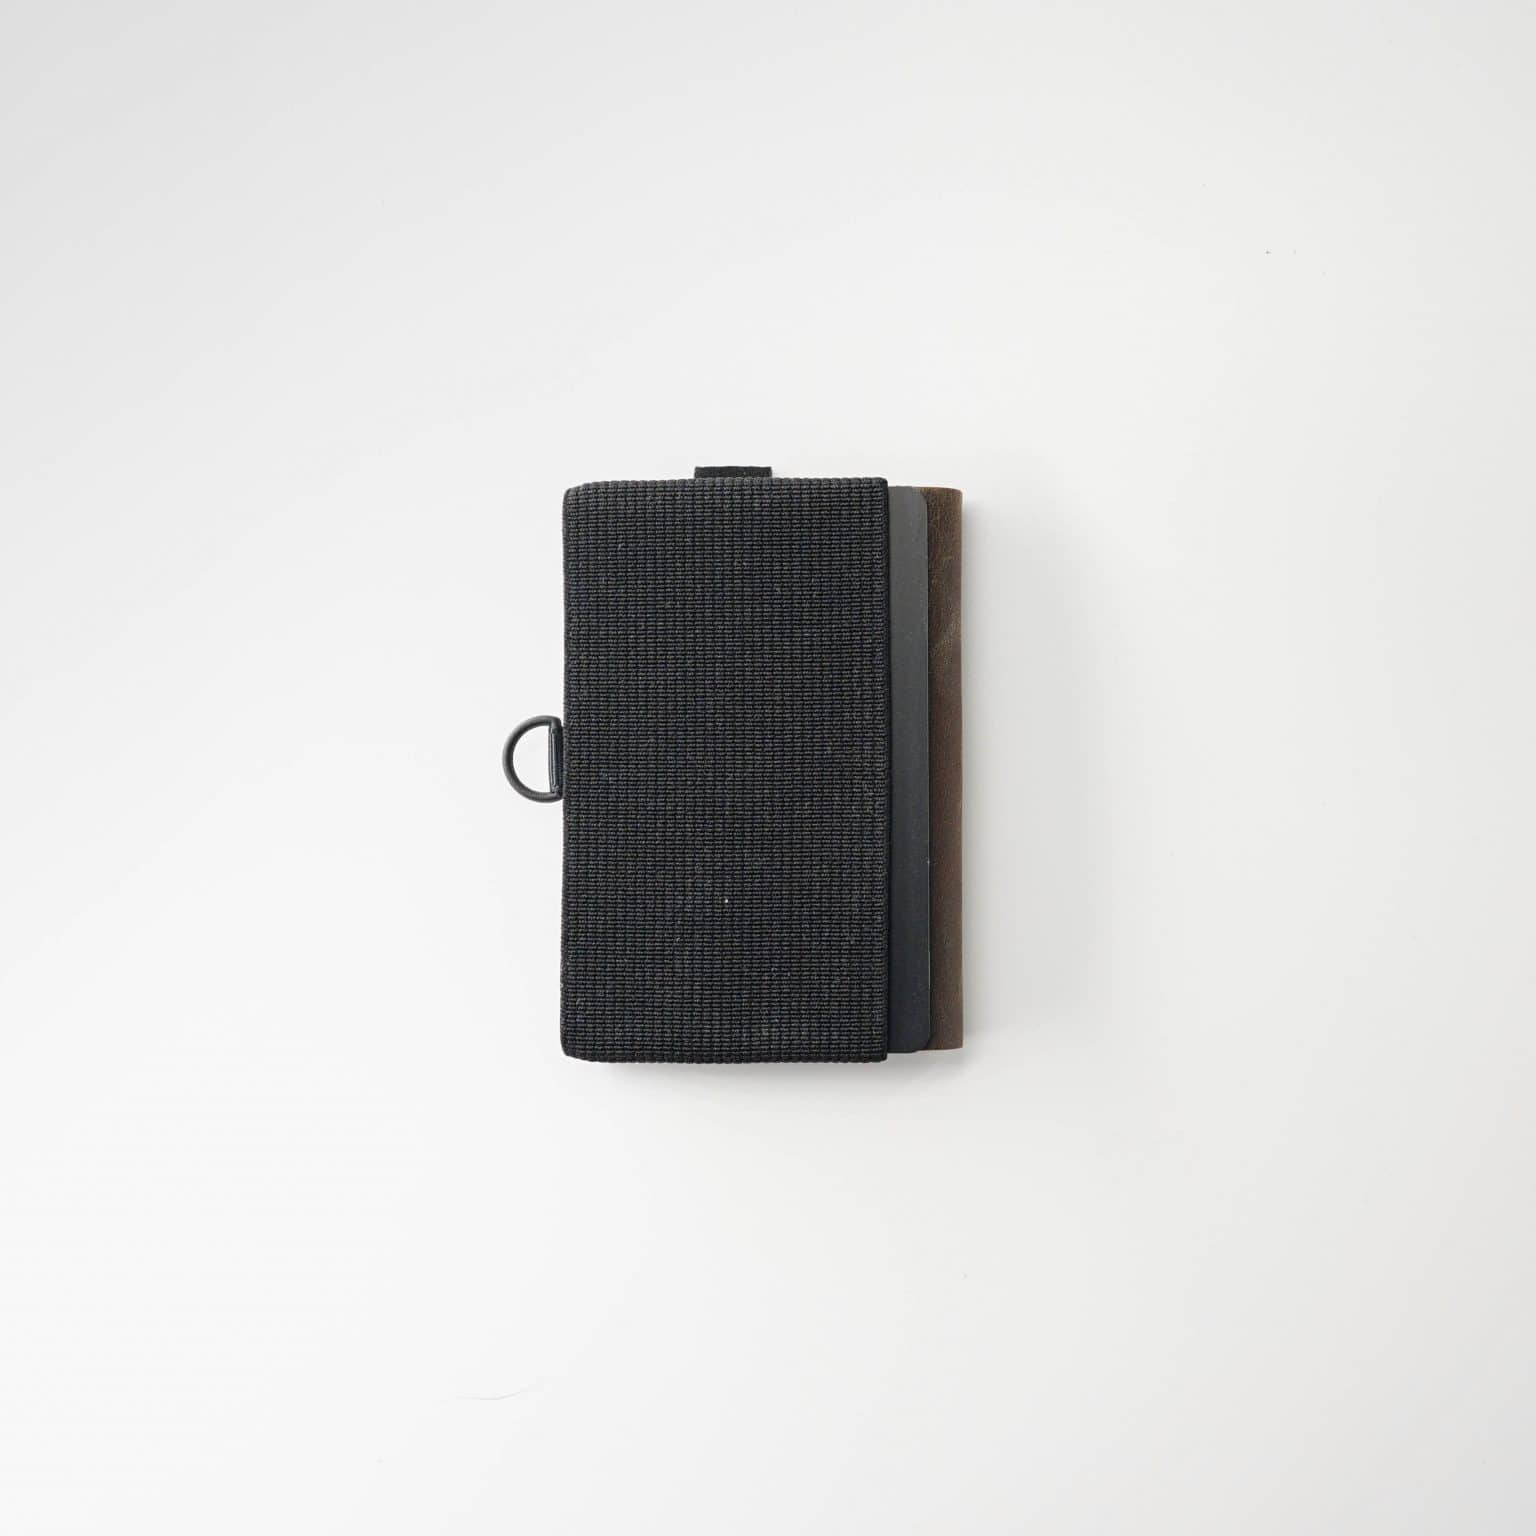 Ultra-modern minimalist wallet with tech integration